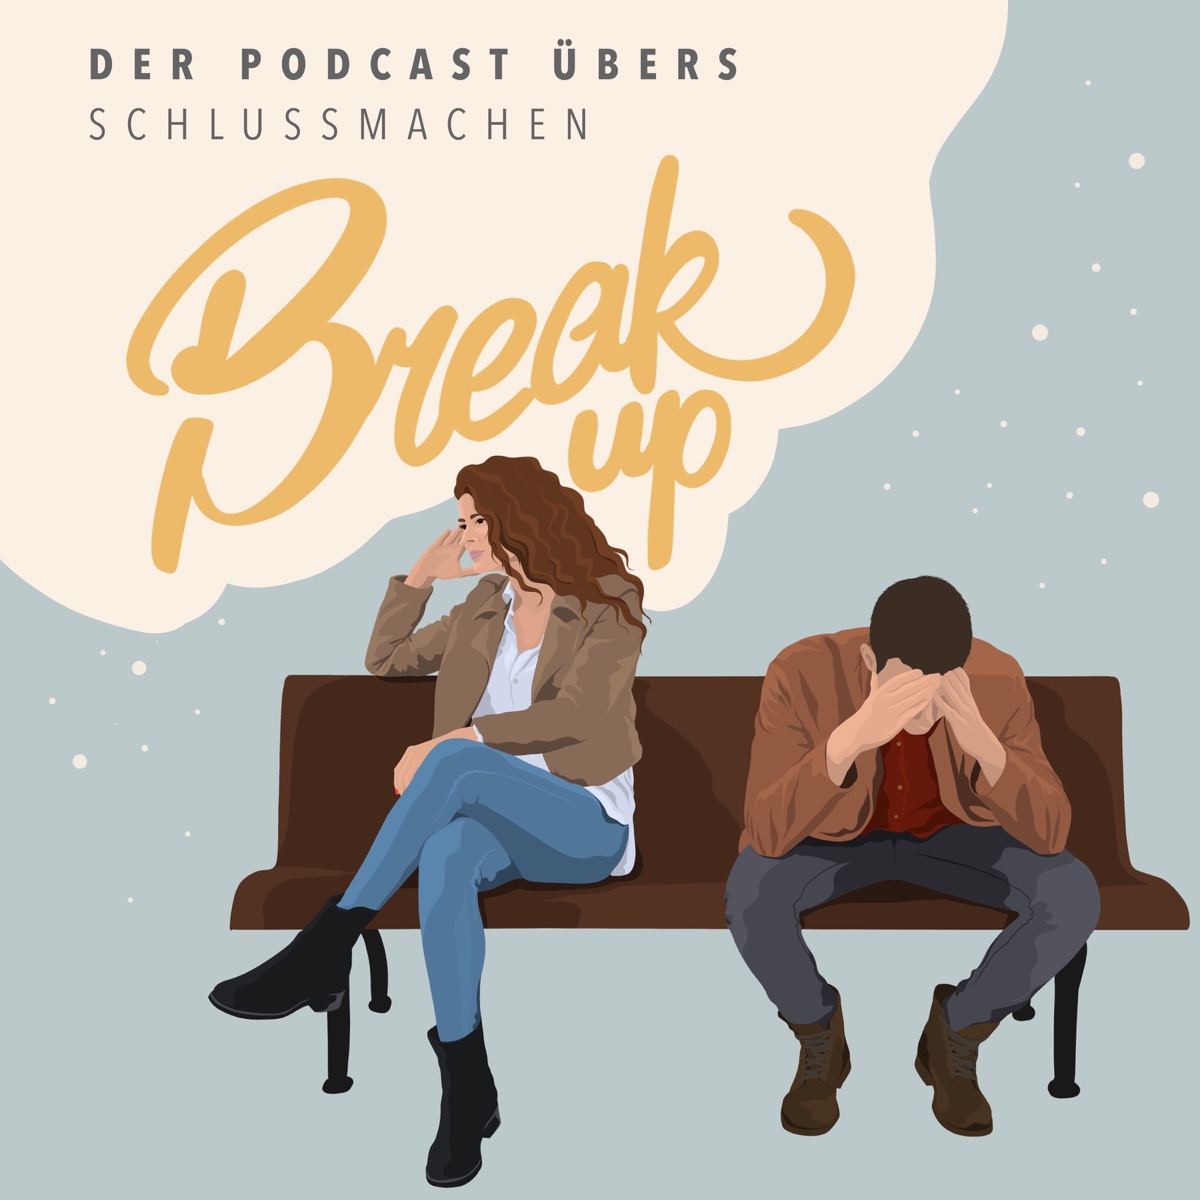 Podcasts spotify sexvergnügen 2018 Can Podcasts